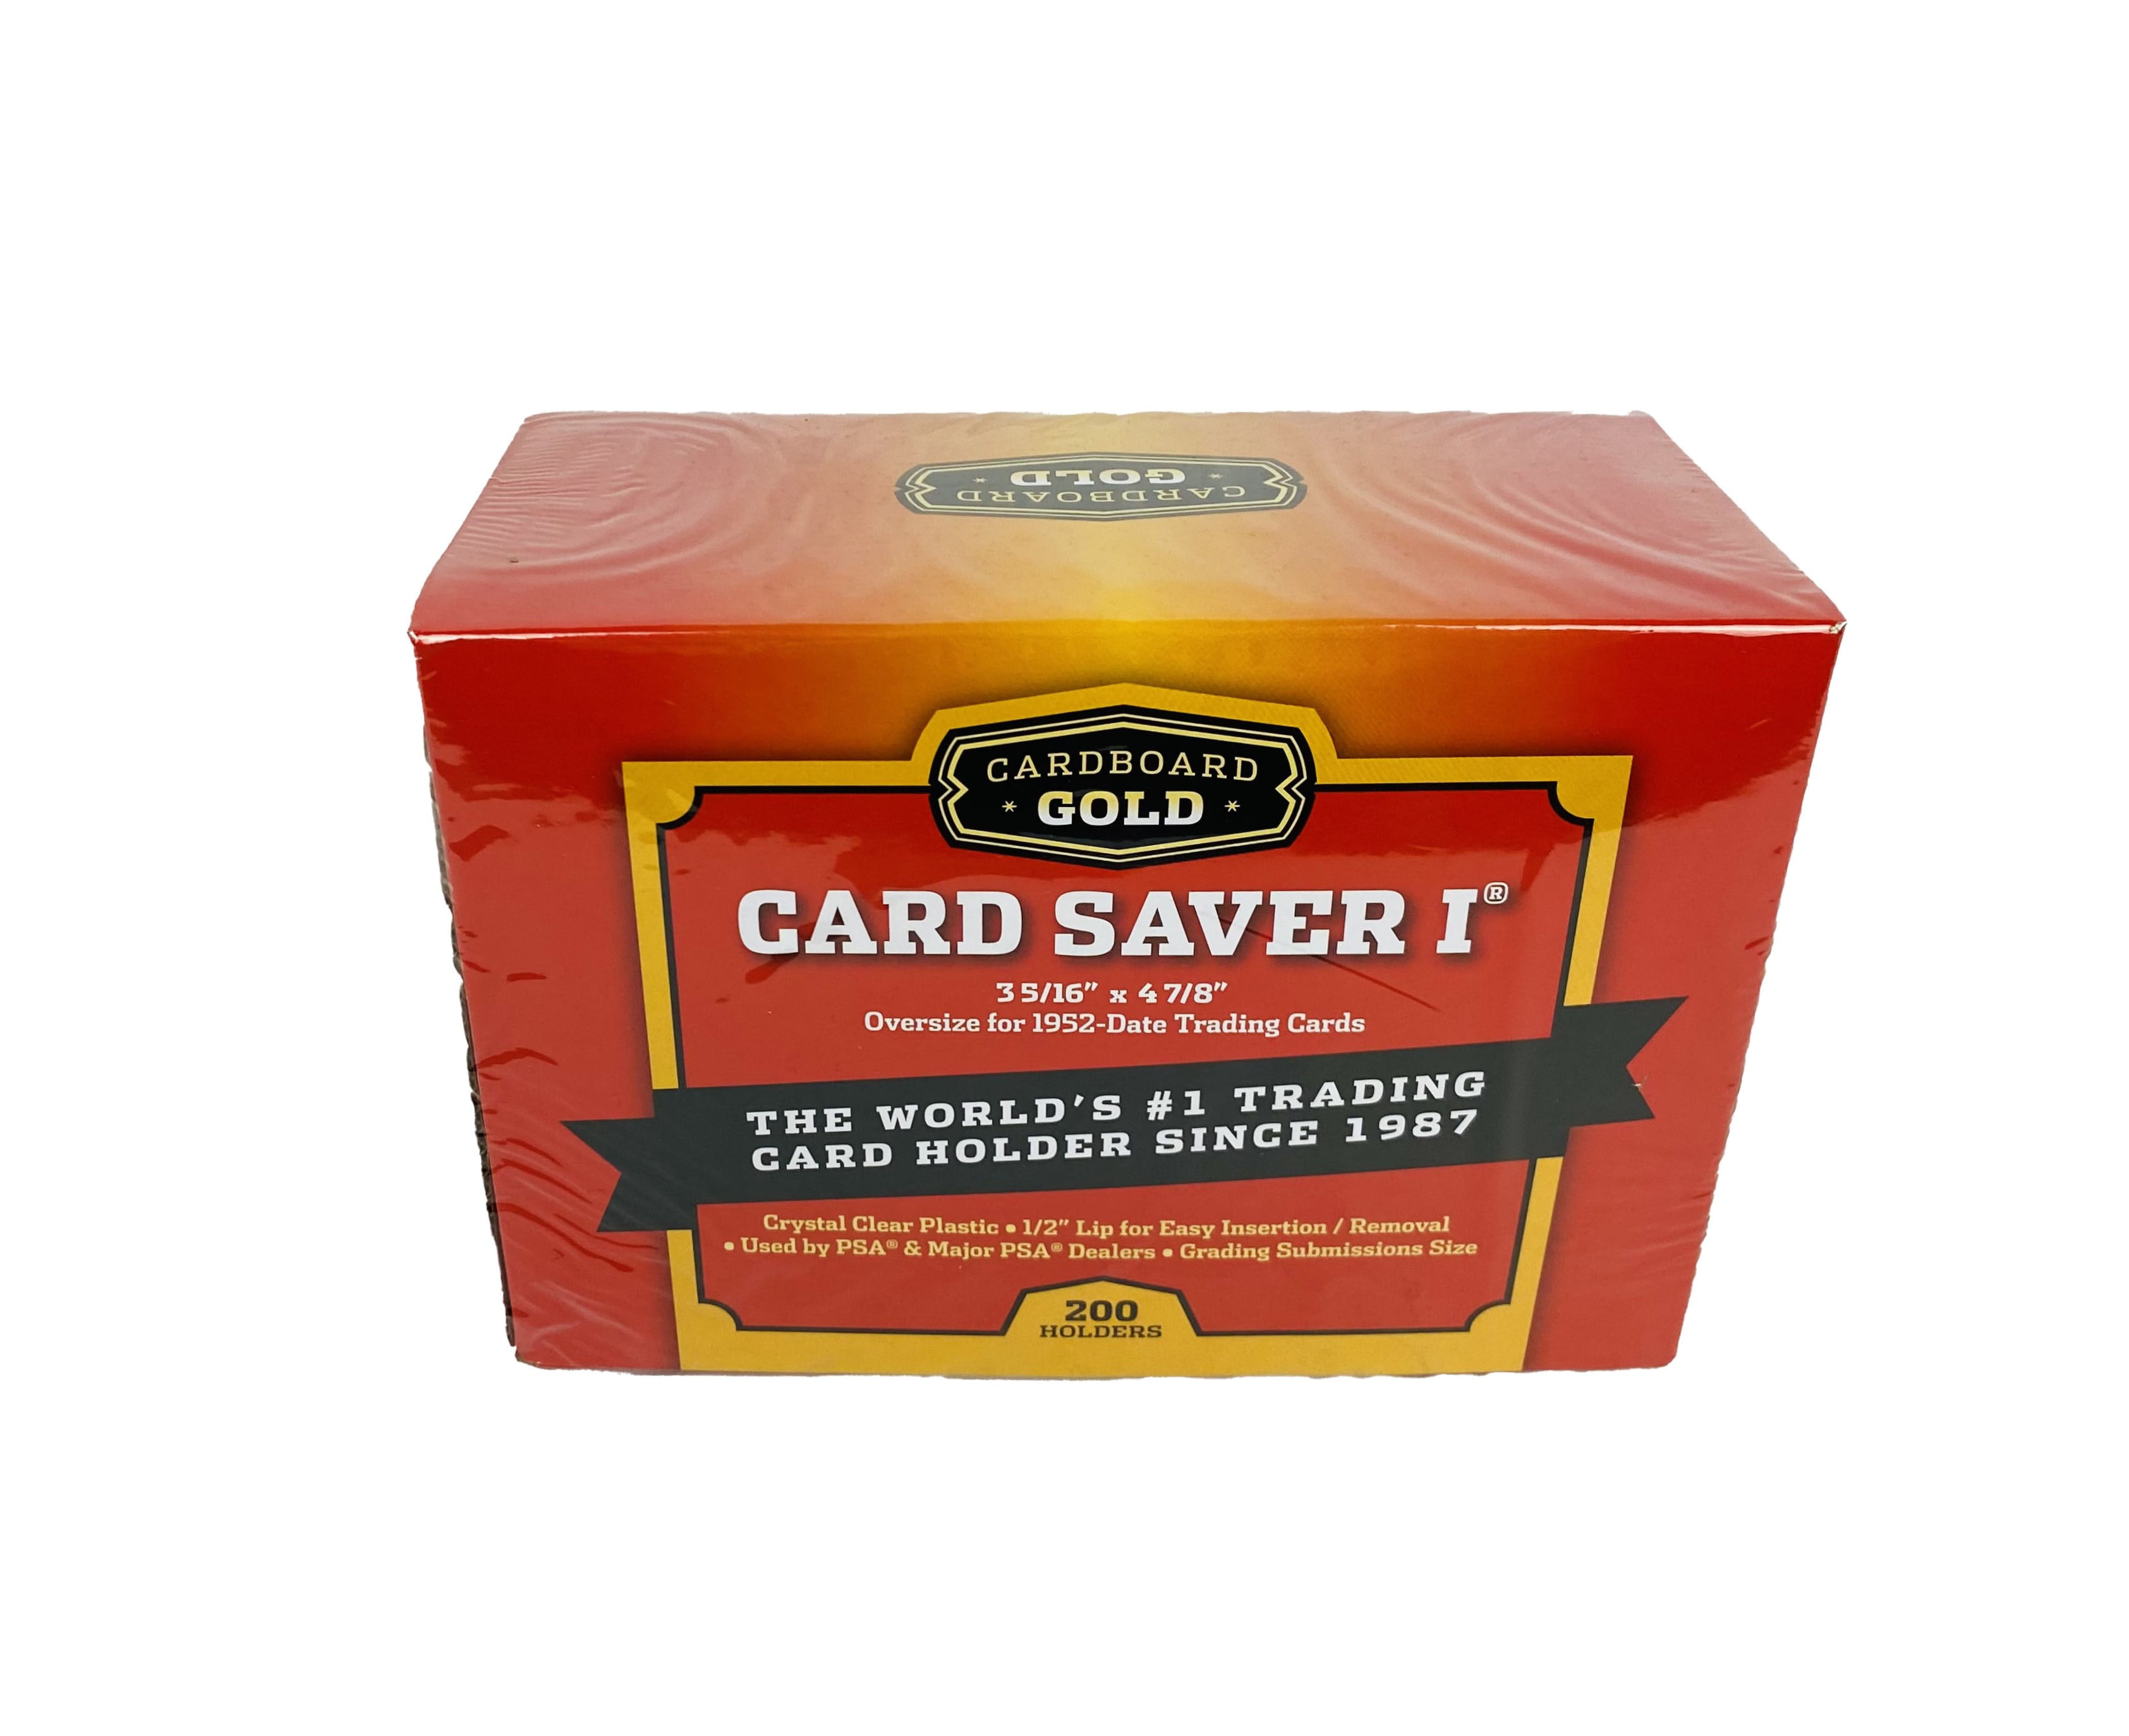 Cardboard Gold CBG-72217-C Card Saver 1 Semi-Rigid Trading Card Holders, 1  Pack Box Of 200 